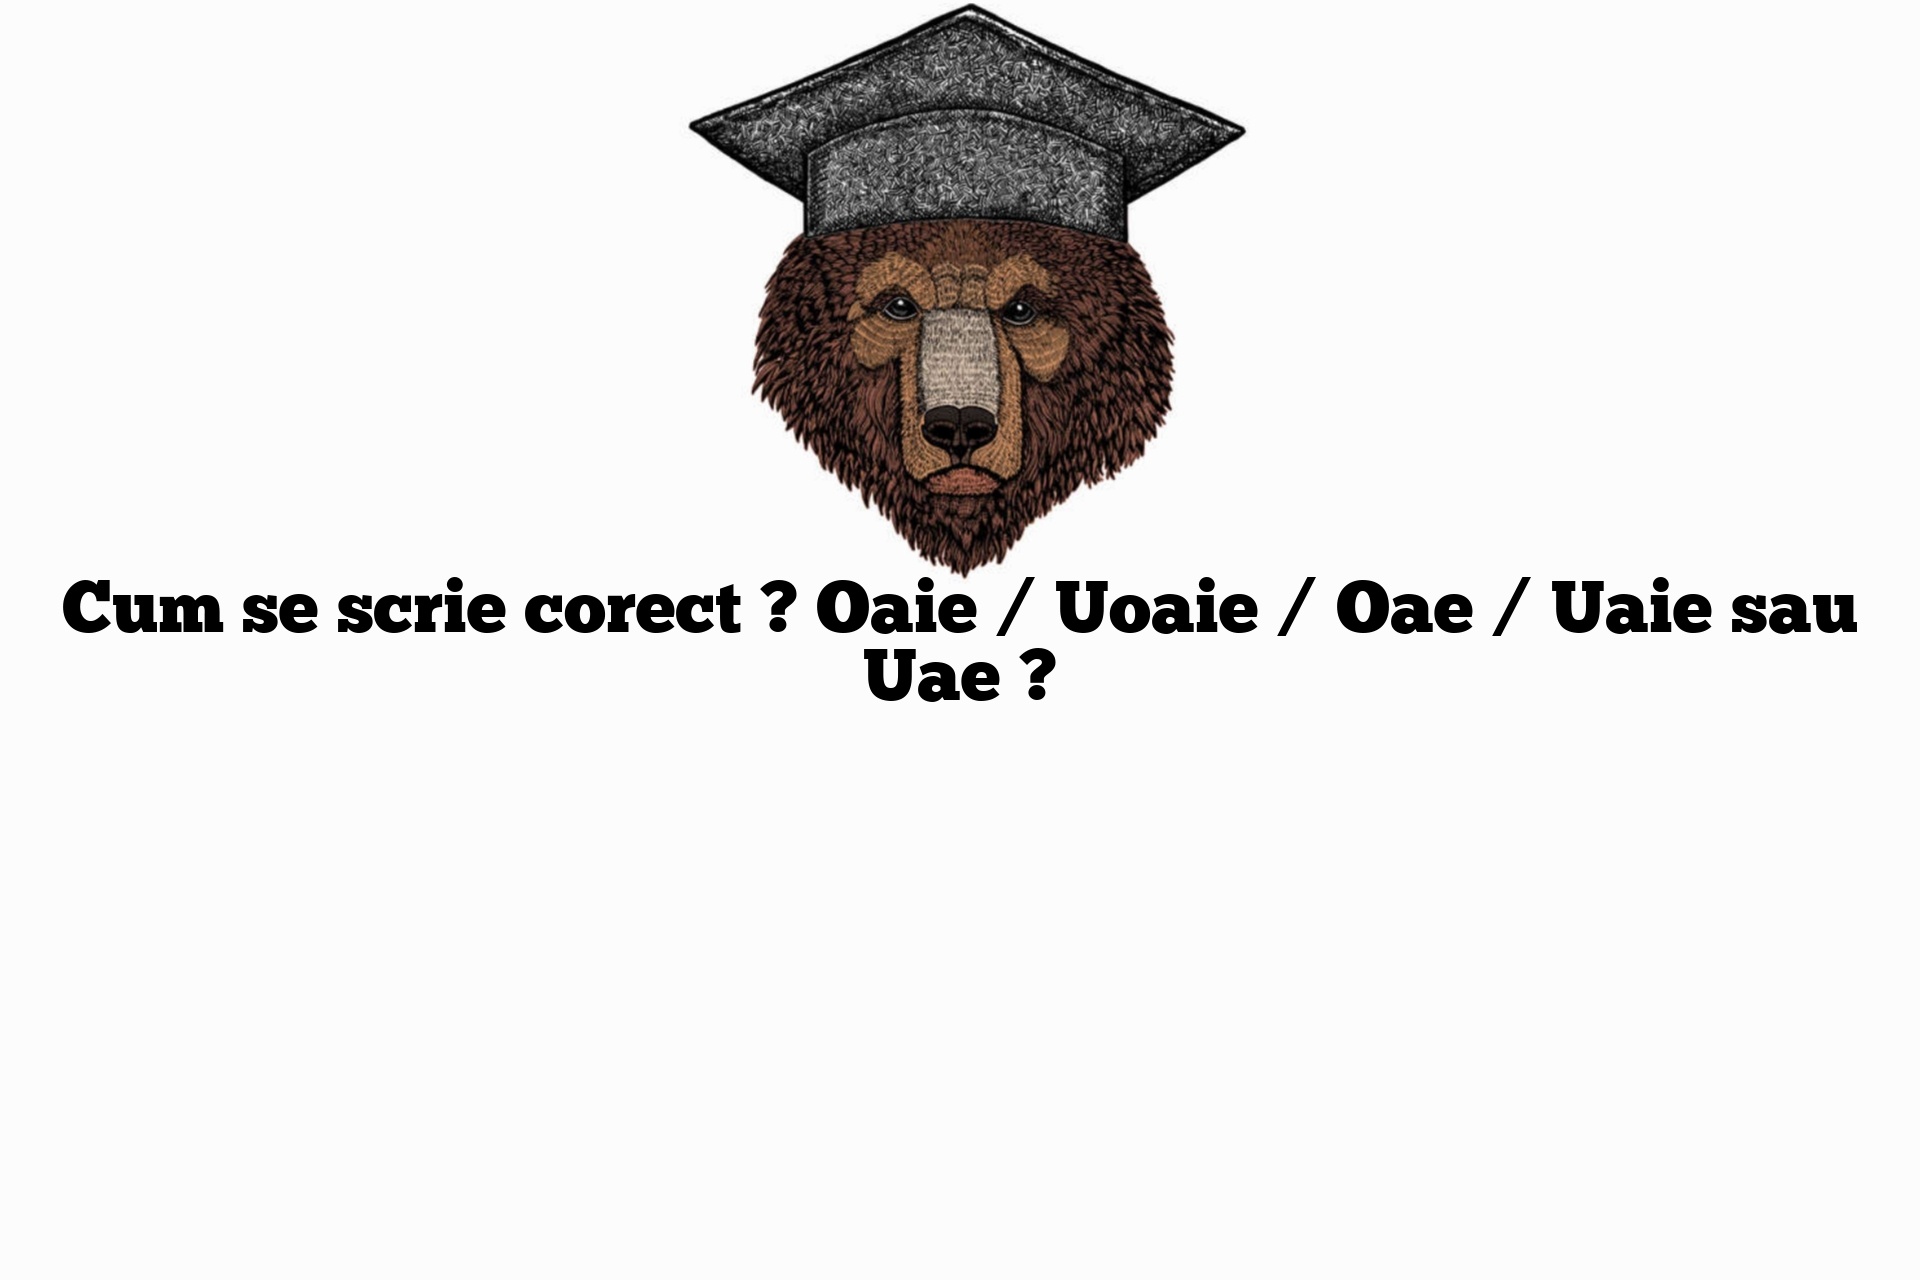 Cum se scrie corect ? Oaie / Uoaie / Oae / Uaie sau Uae ?